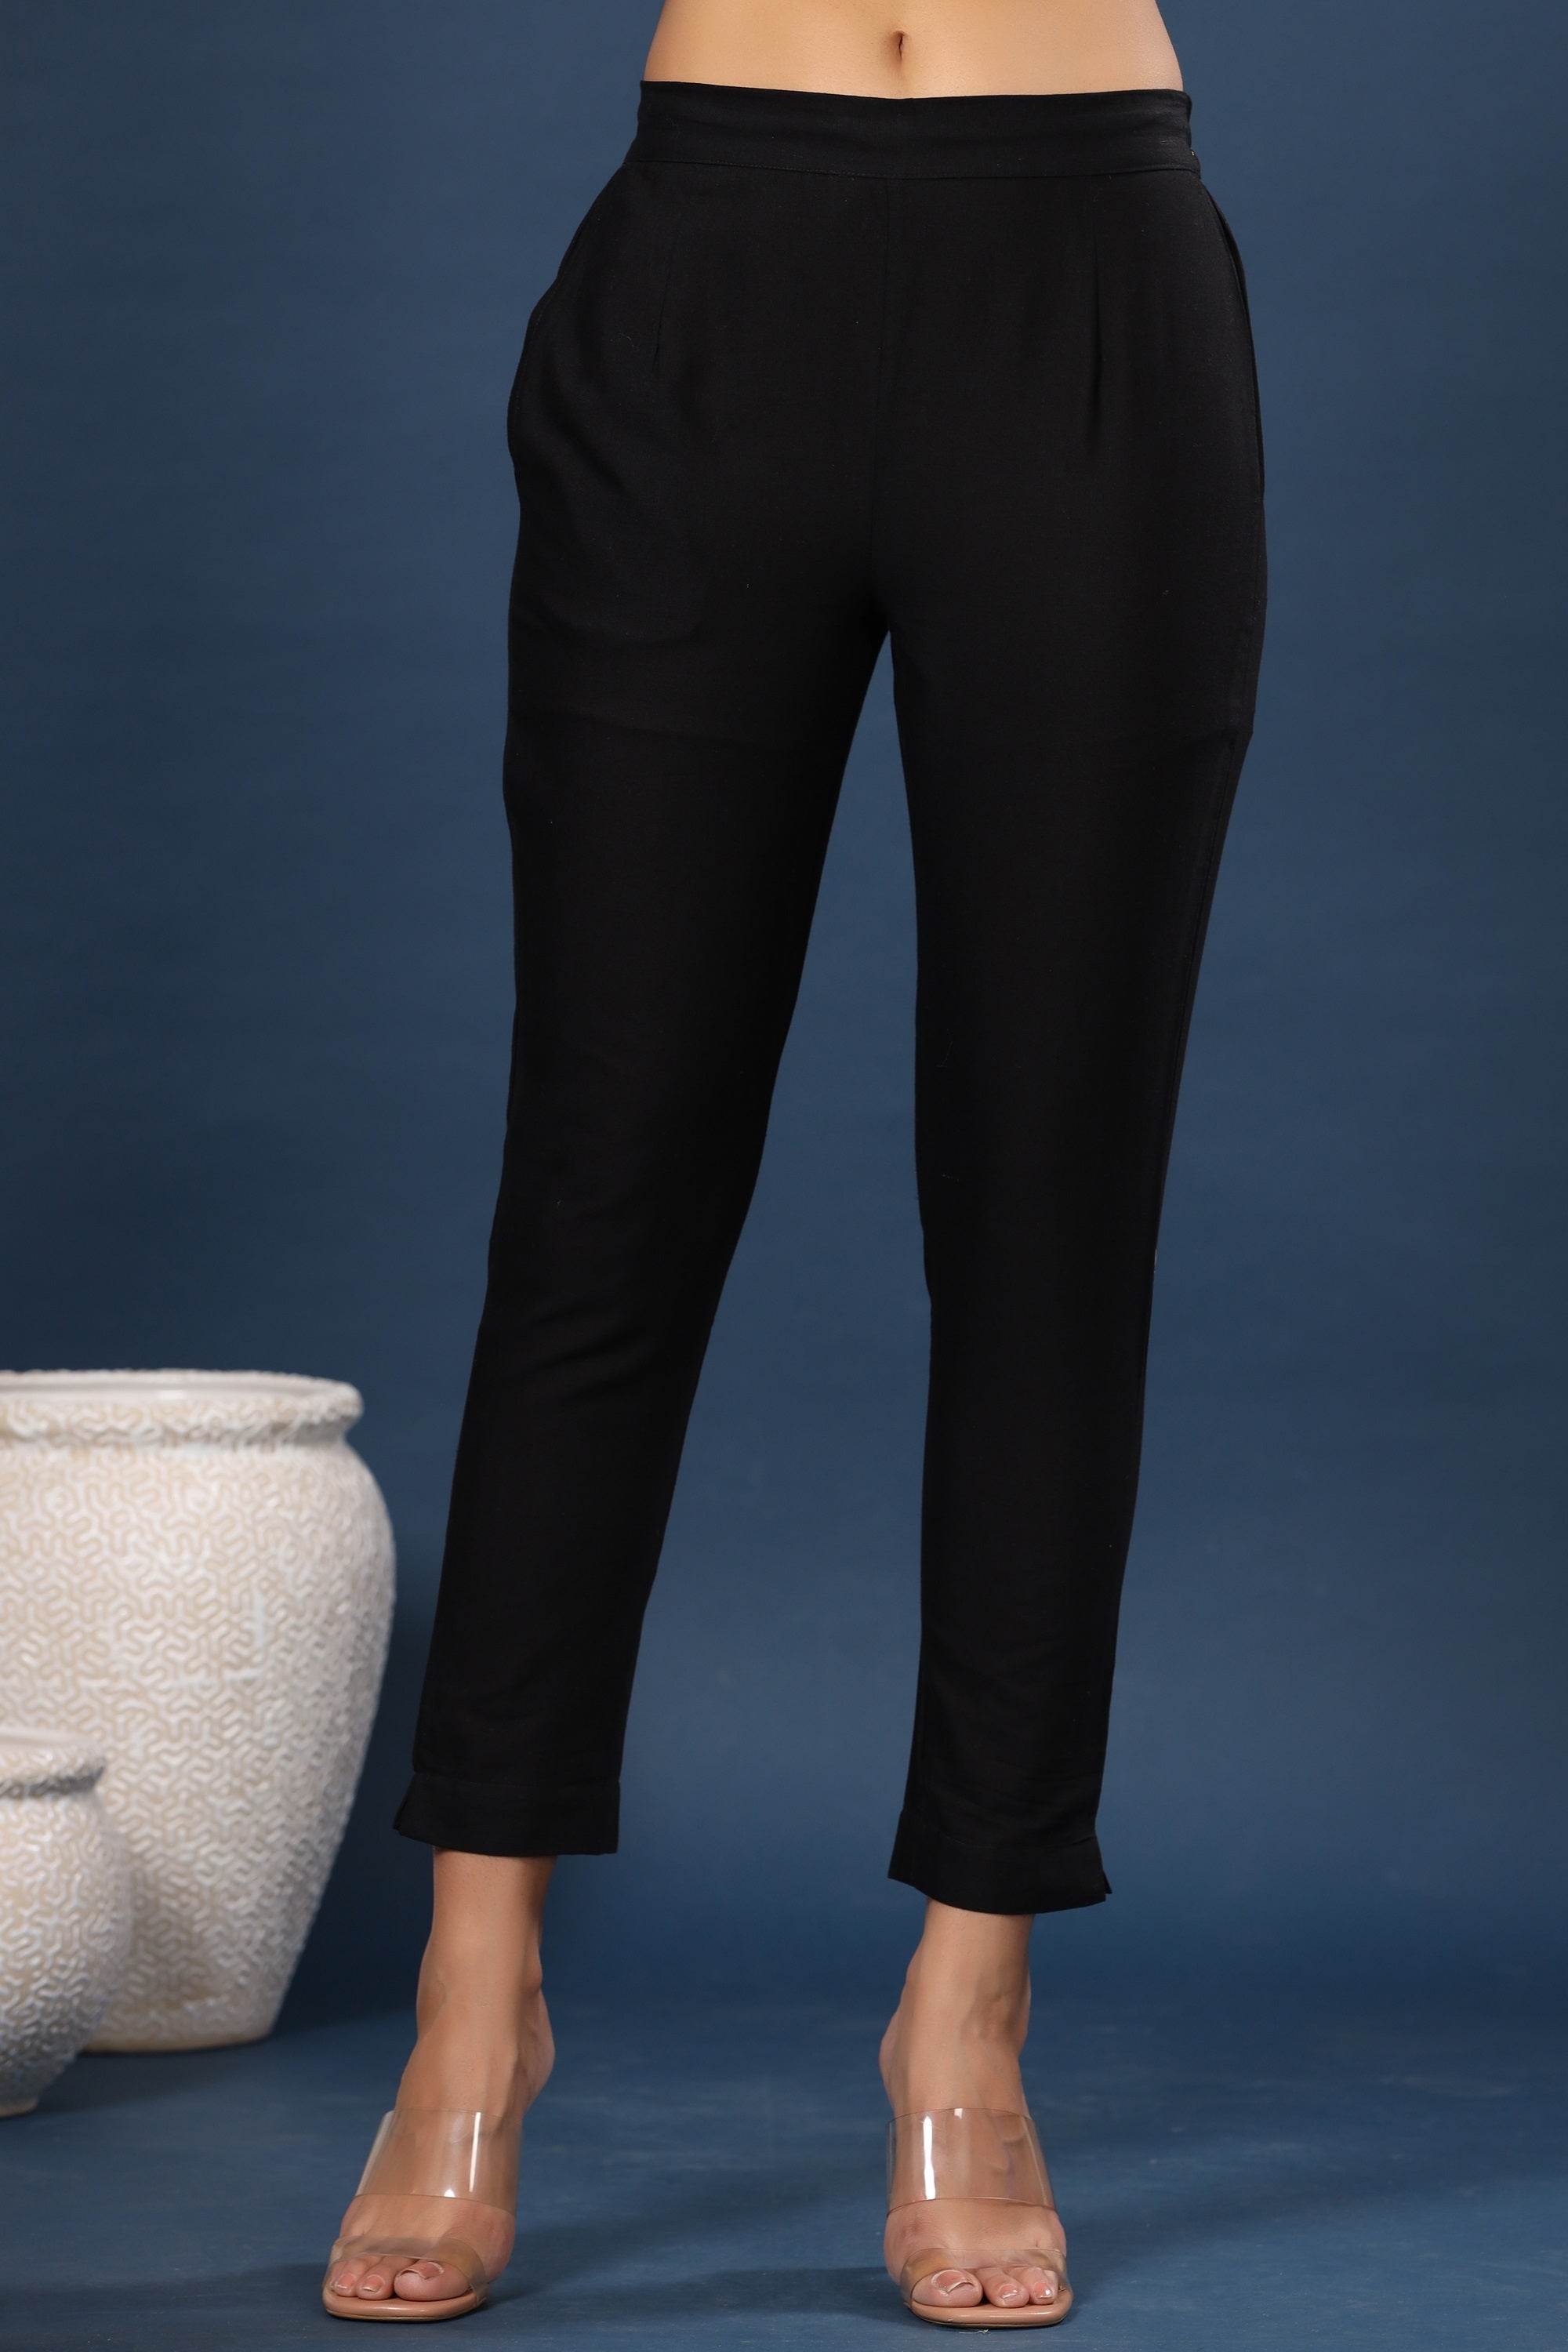 Juniper Black Solid Cotton Flex Slim Fit Women Pants With Two Pockets